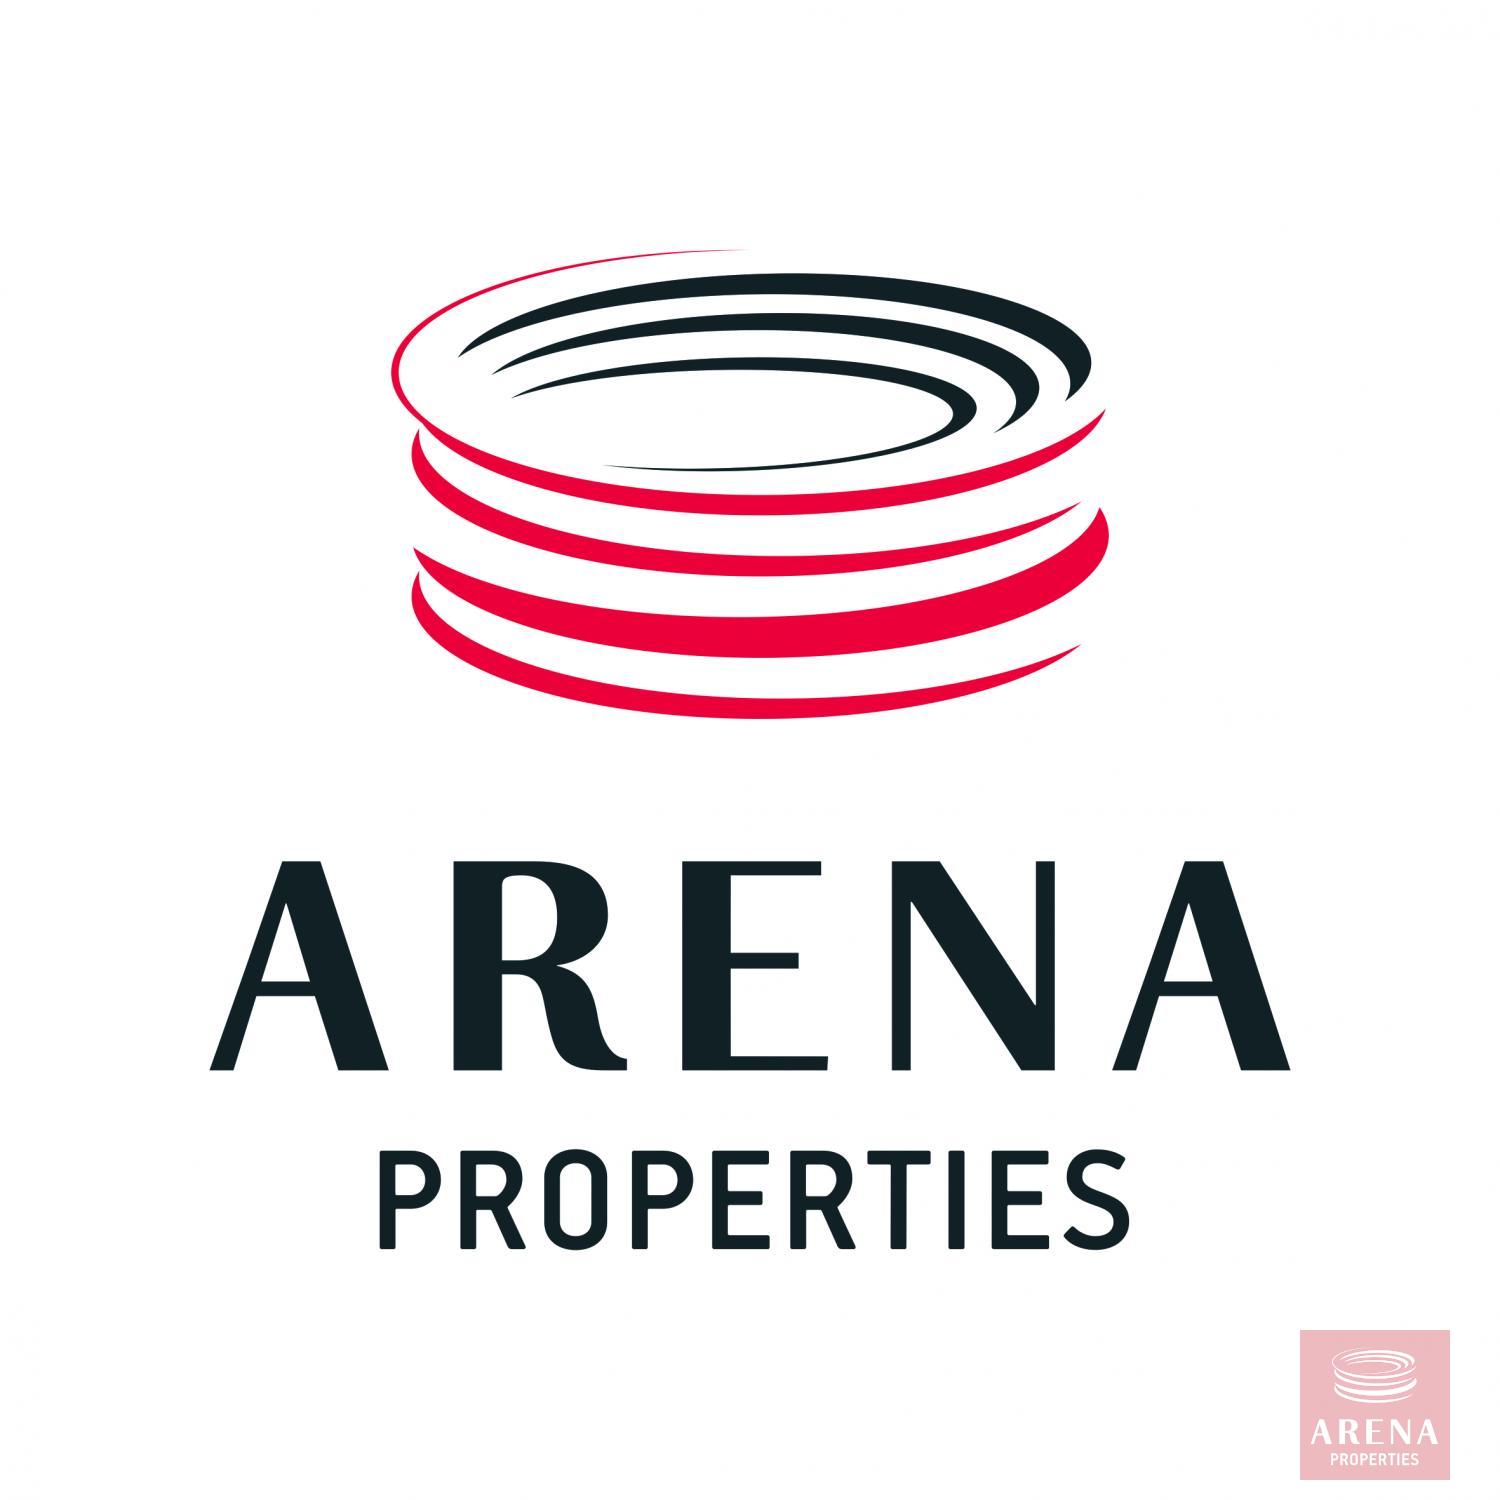 arena properties logo white 3